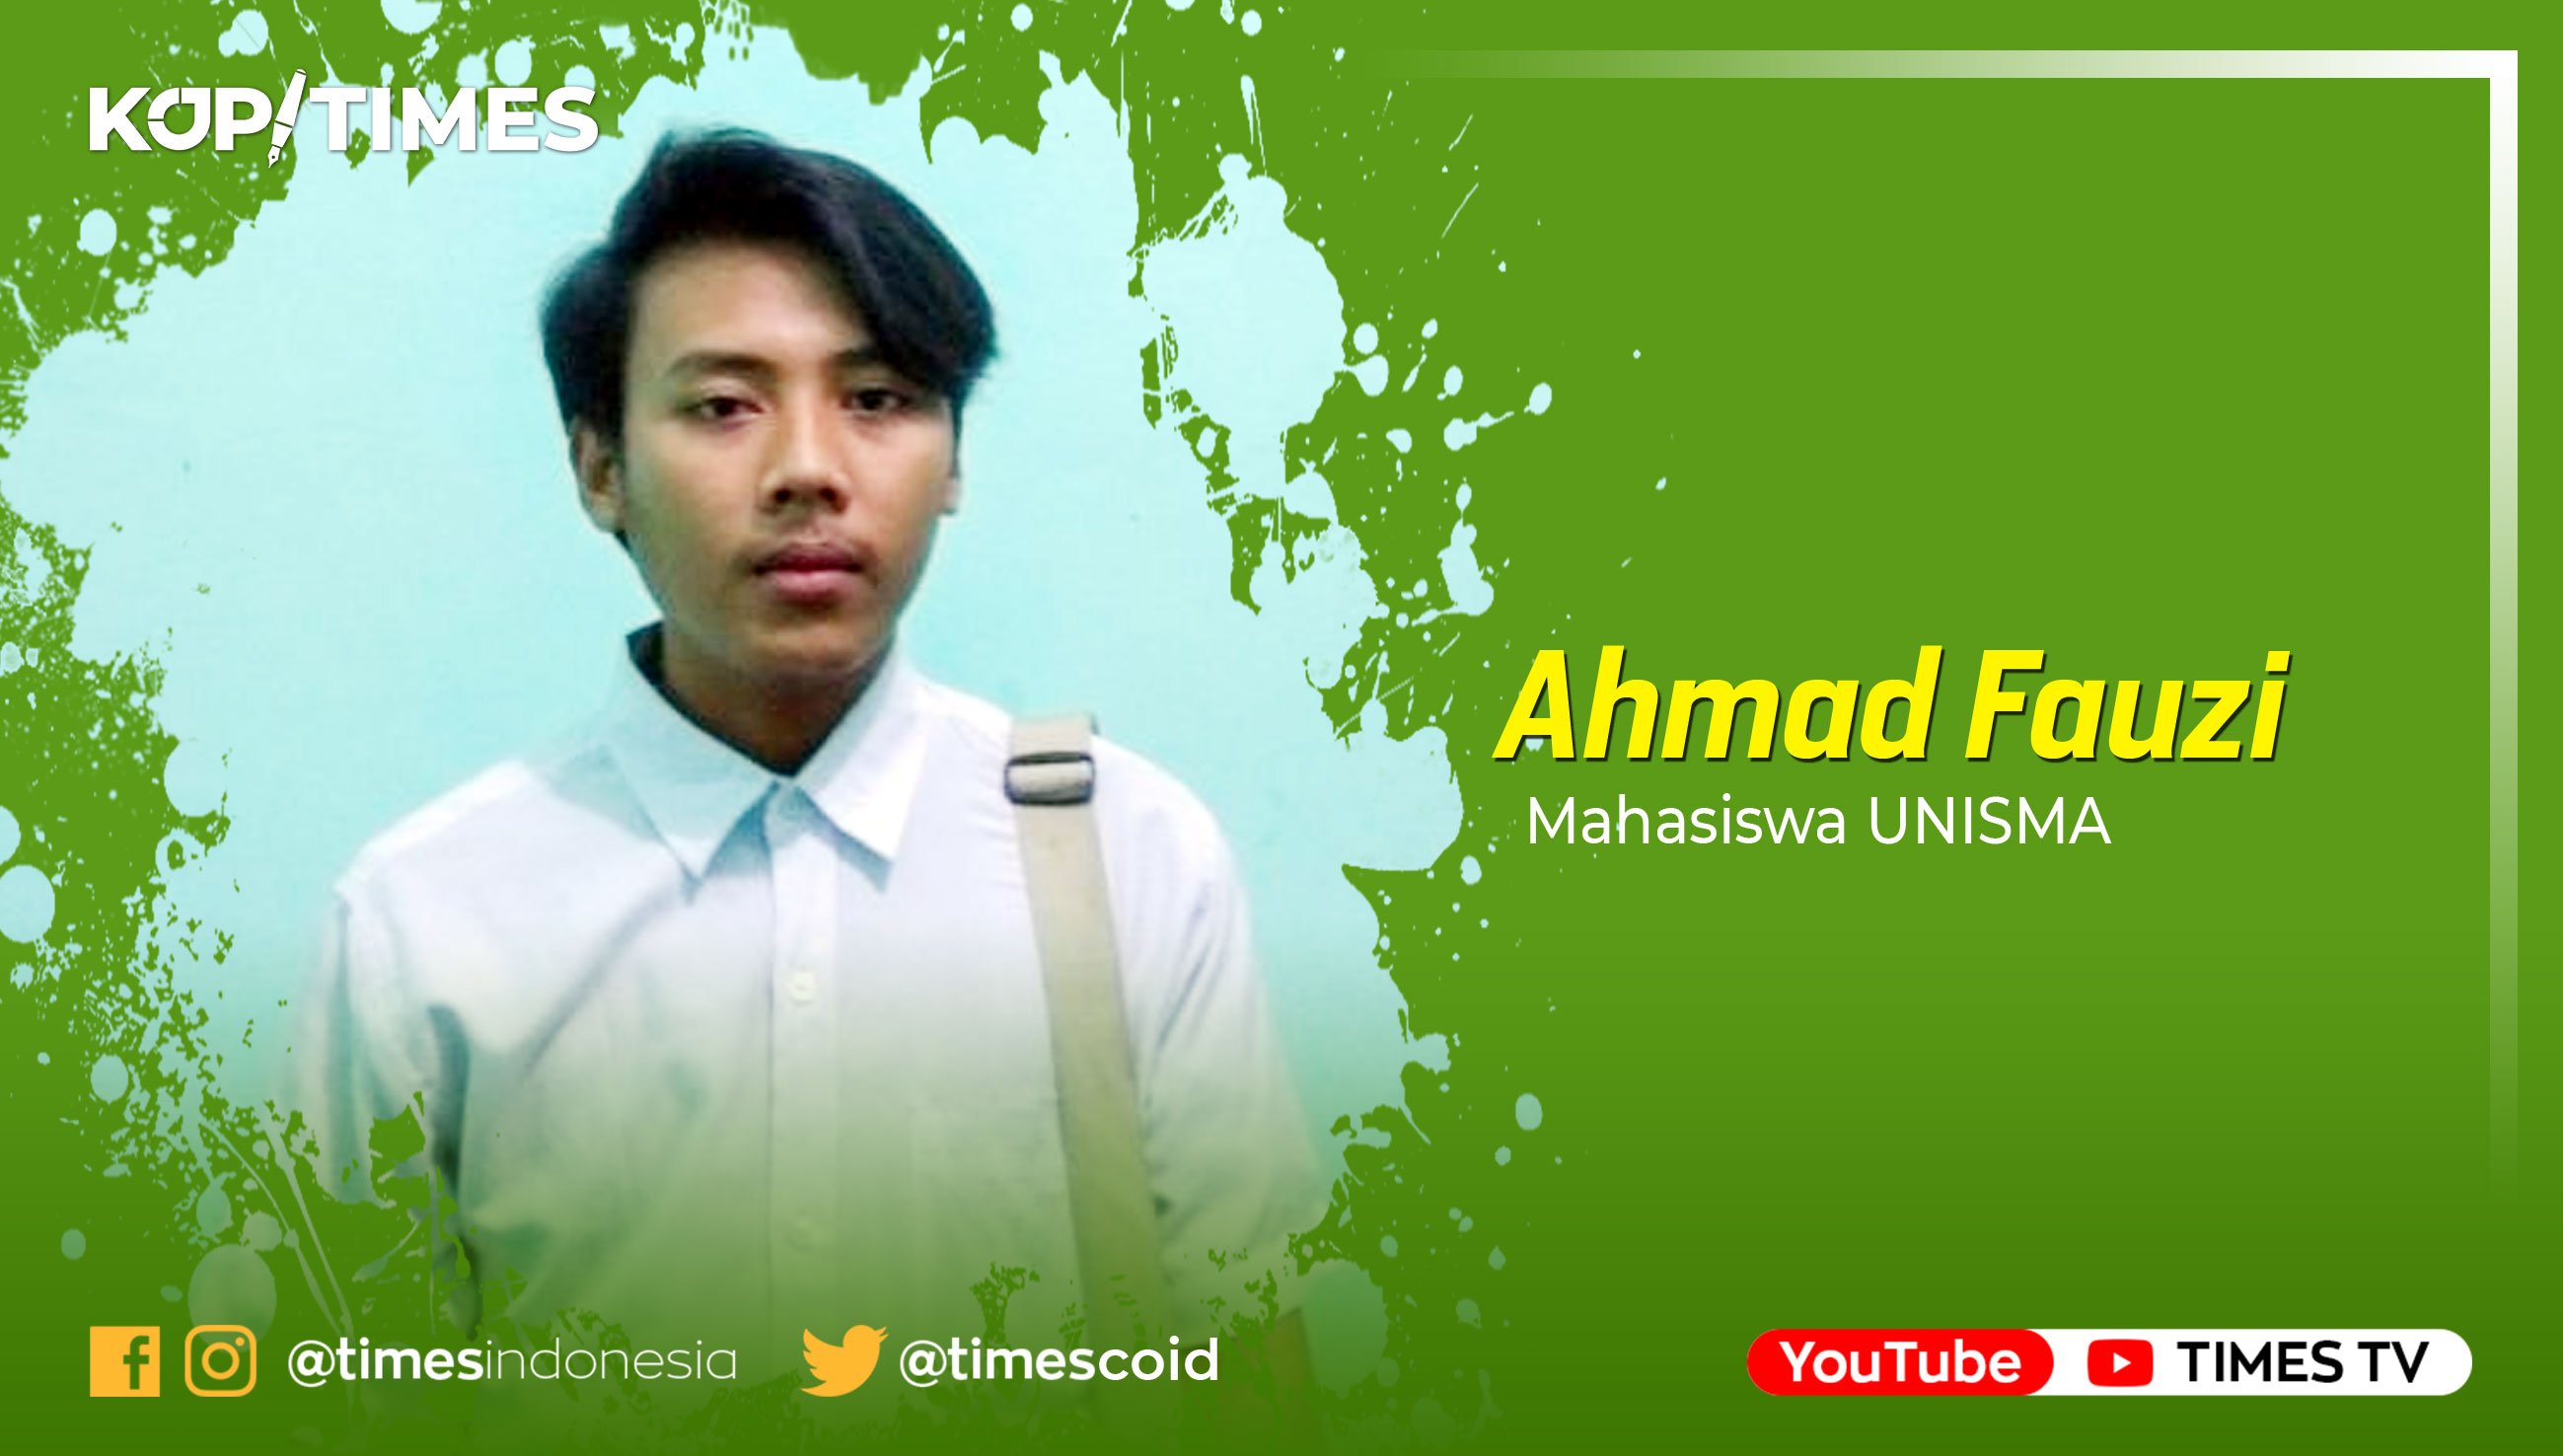 Ahmad Fauzi, Mahasiswa UNISMA, Anggota KKI (Kelompok Kajian Interdisipliner) Karya Tulis Ilmiah UNISMA.